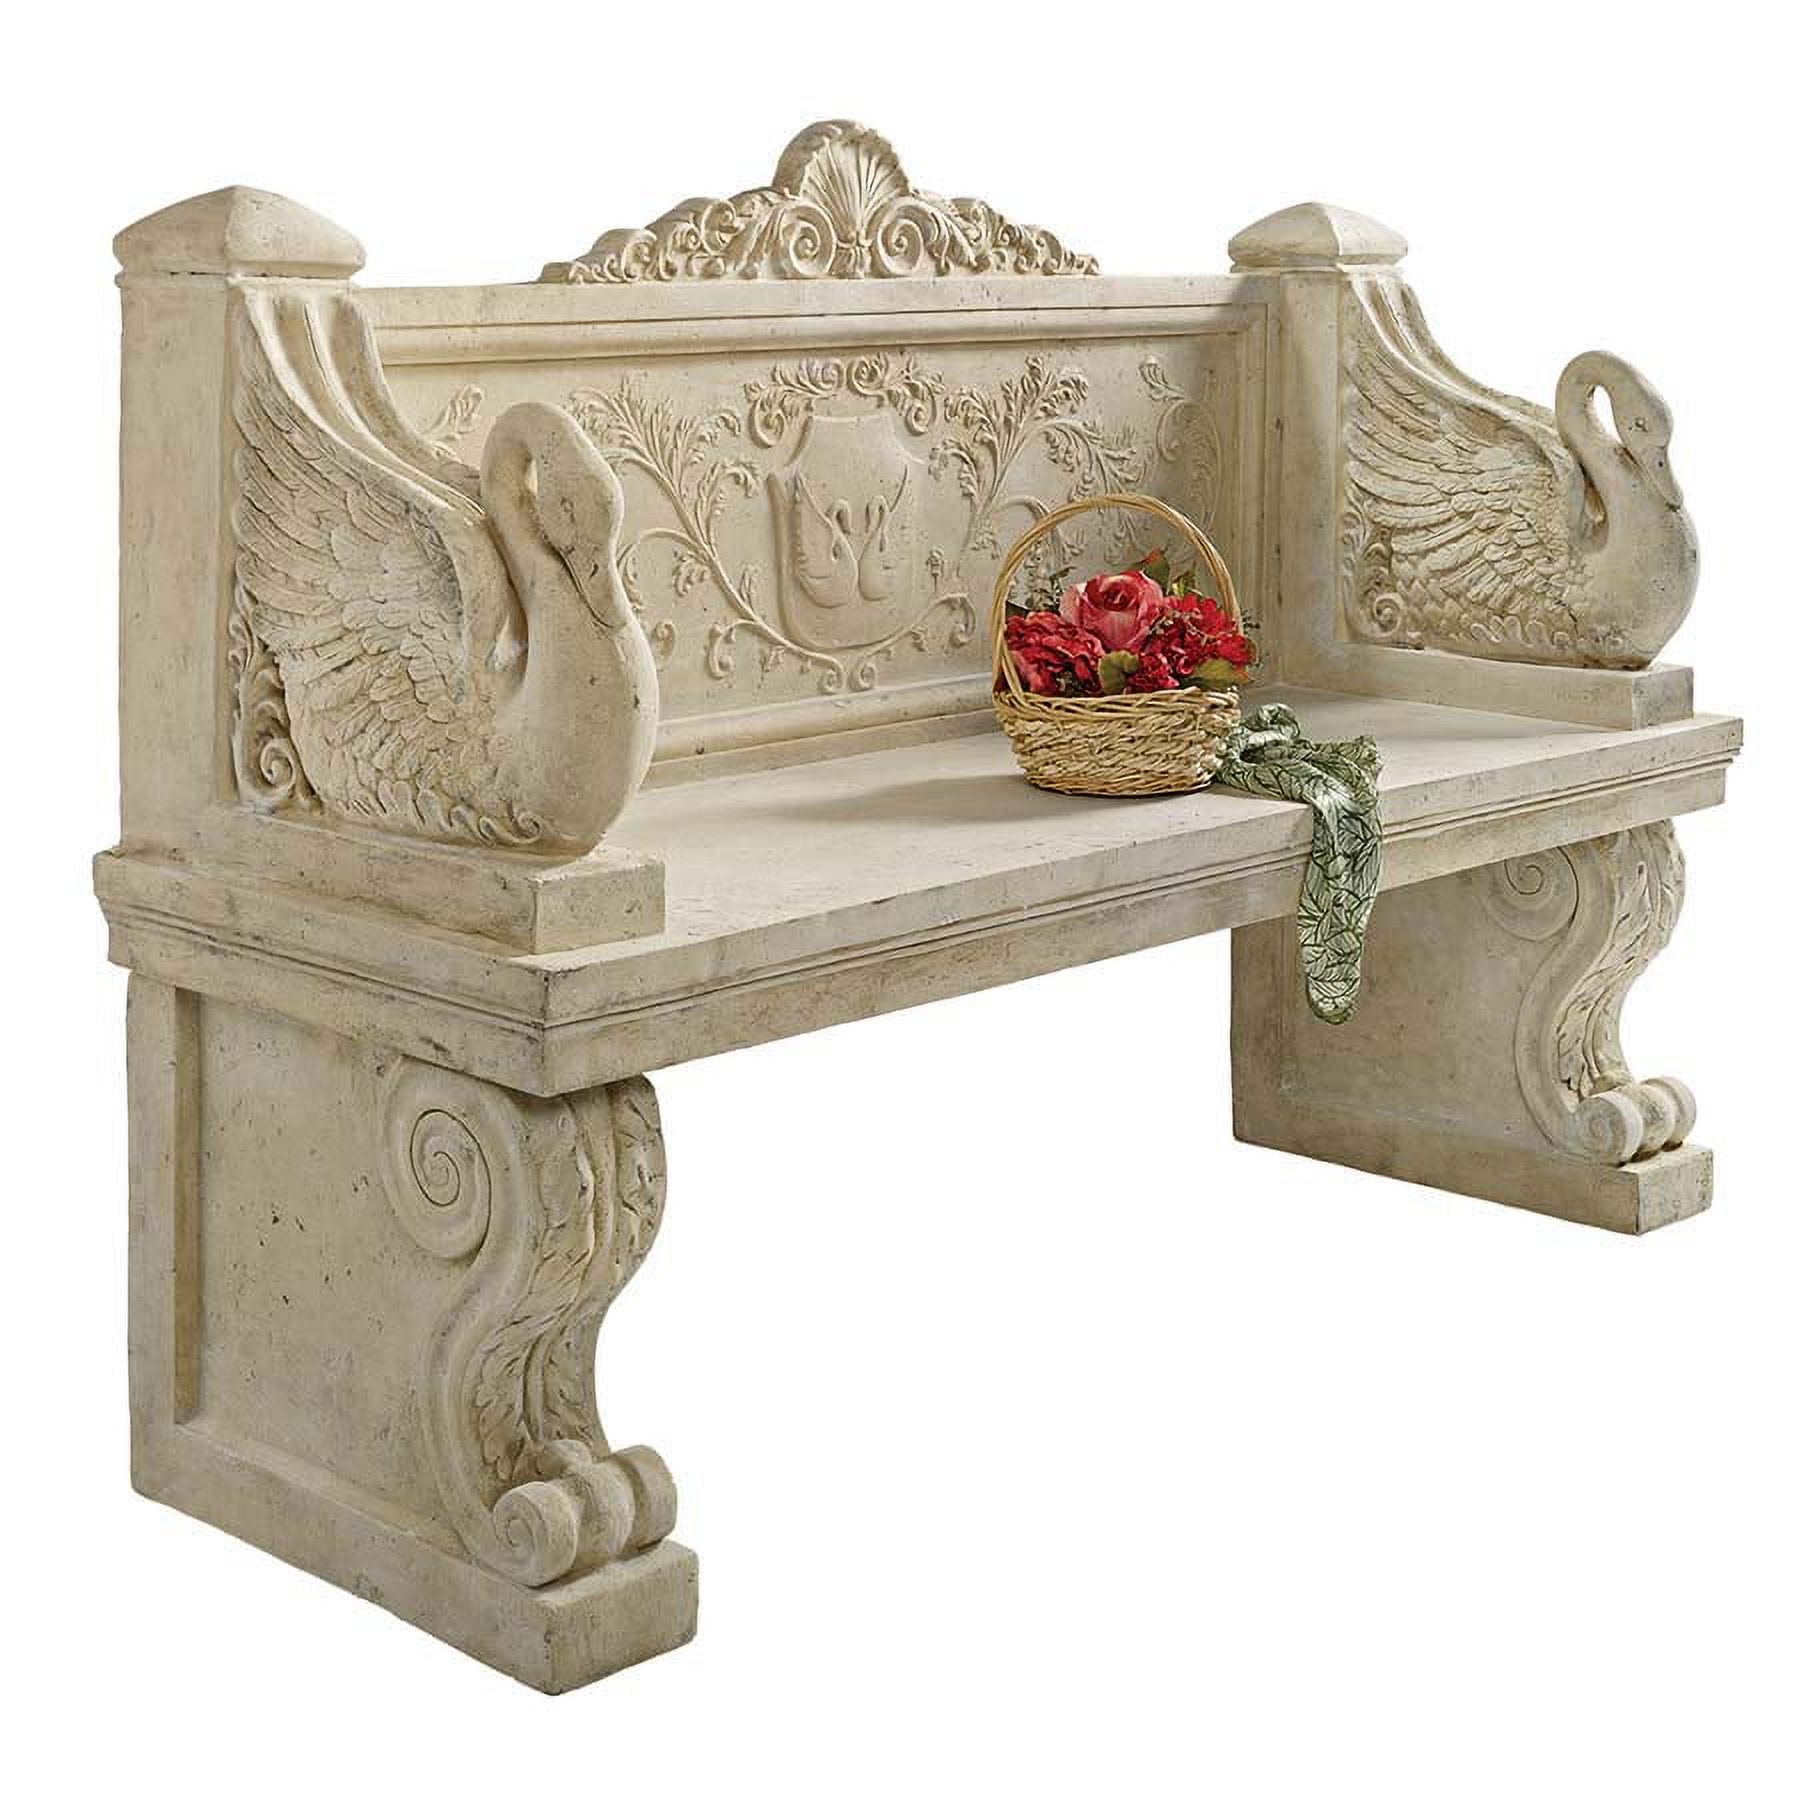 Design Toscano Giant Neoclassical Swan Garden Bench - image 1 of 4